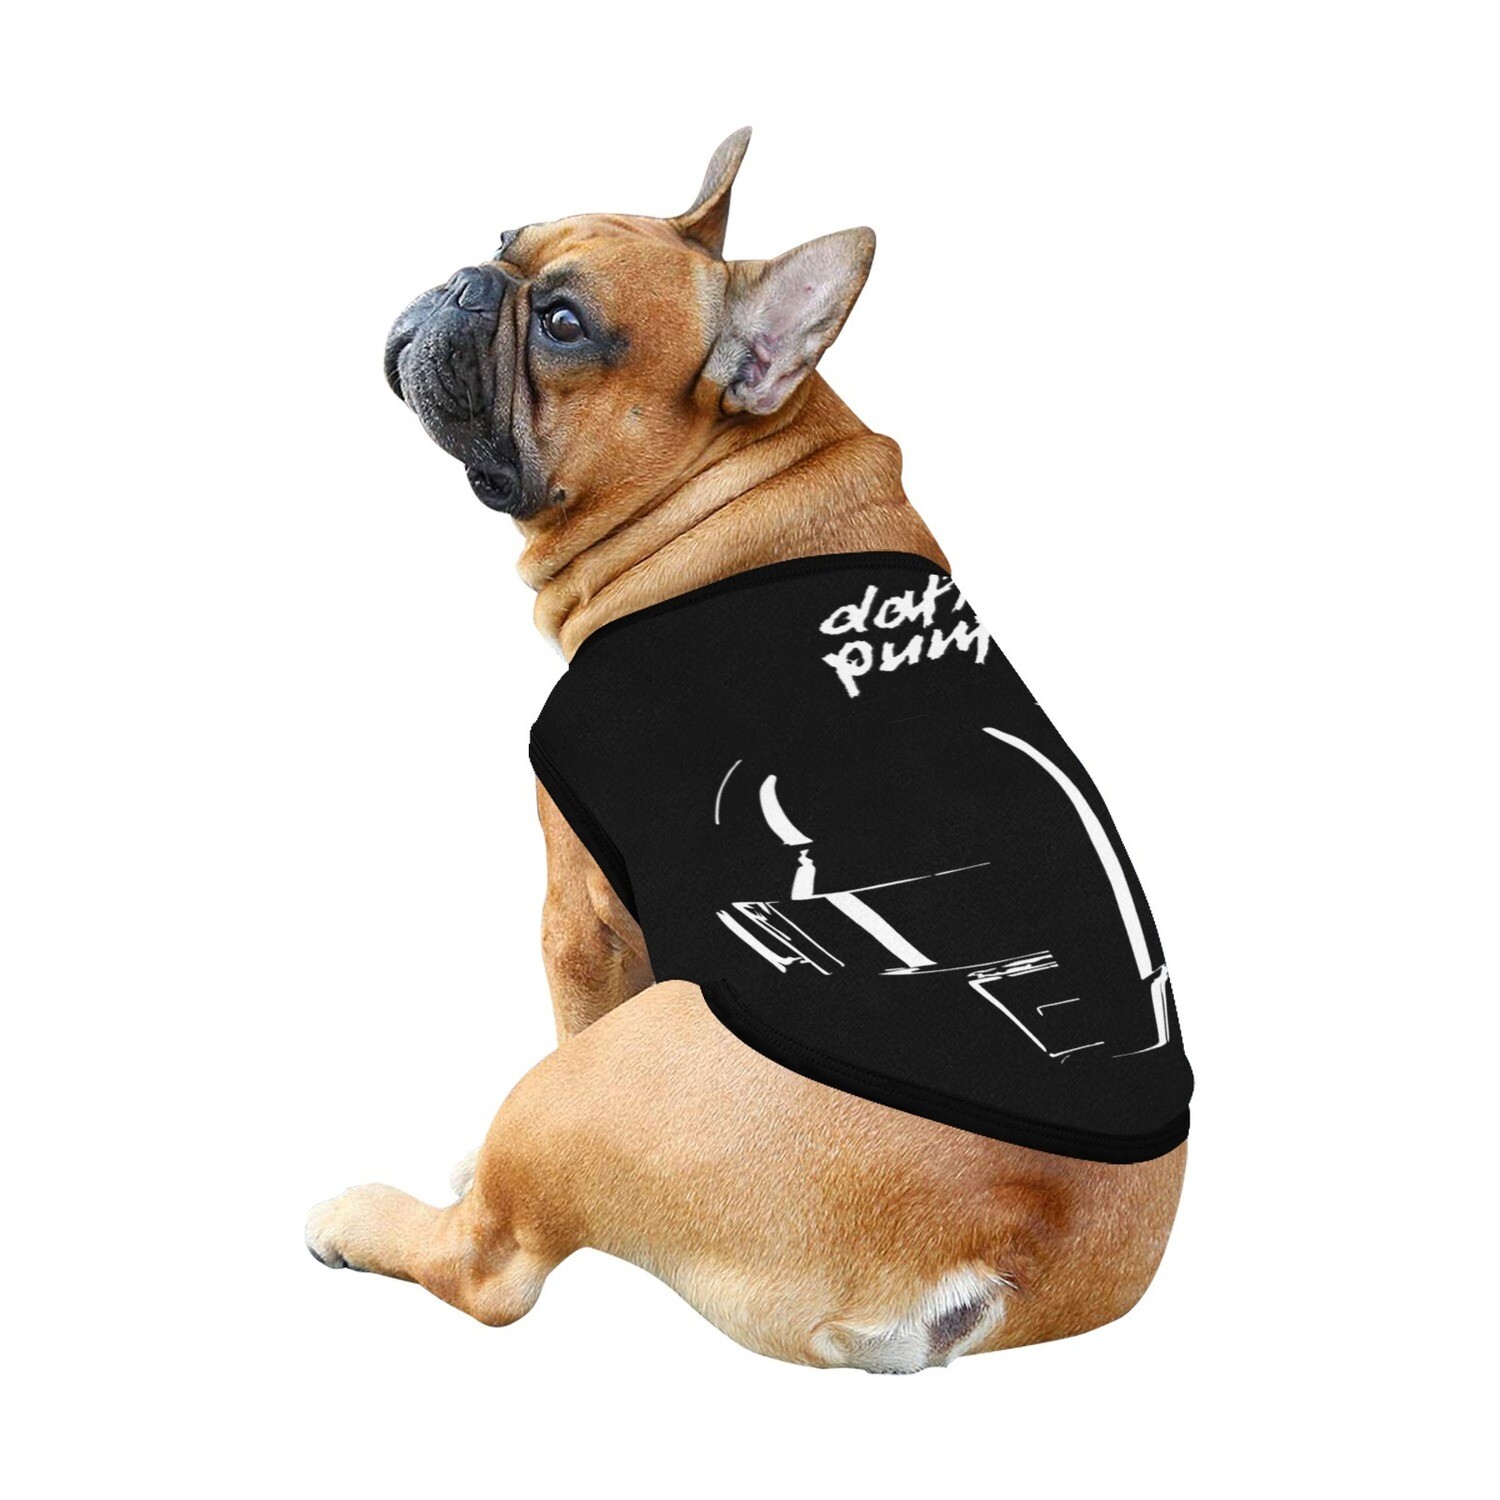 🐕 I love Daft Punk Dog Tank Top, Dog shirt, Dog clothes, Gifts, front back print, 7 sizes XS to 3XL, dog t-shirt, black